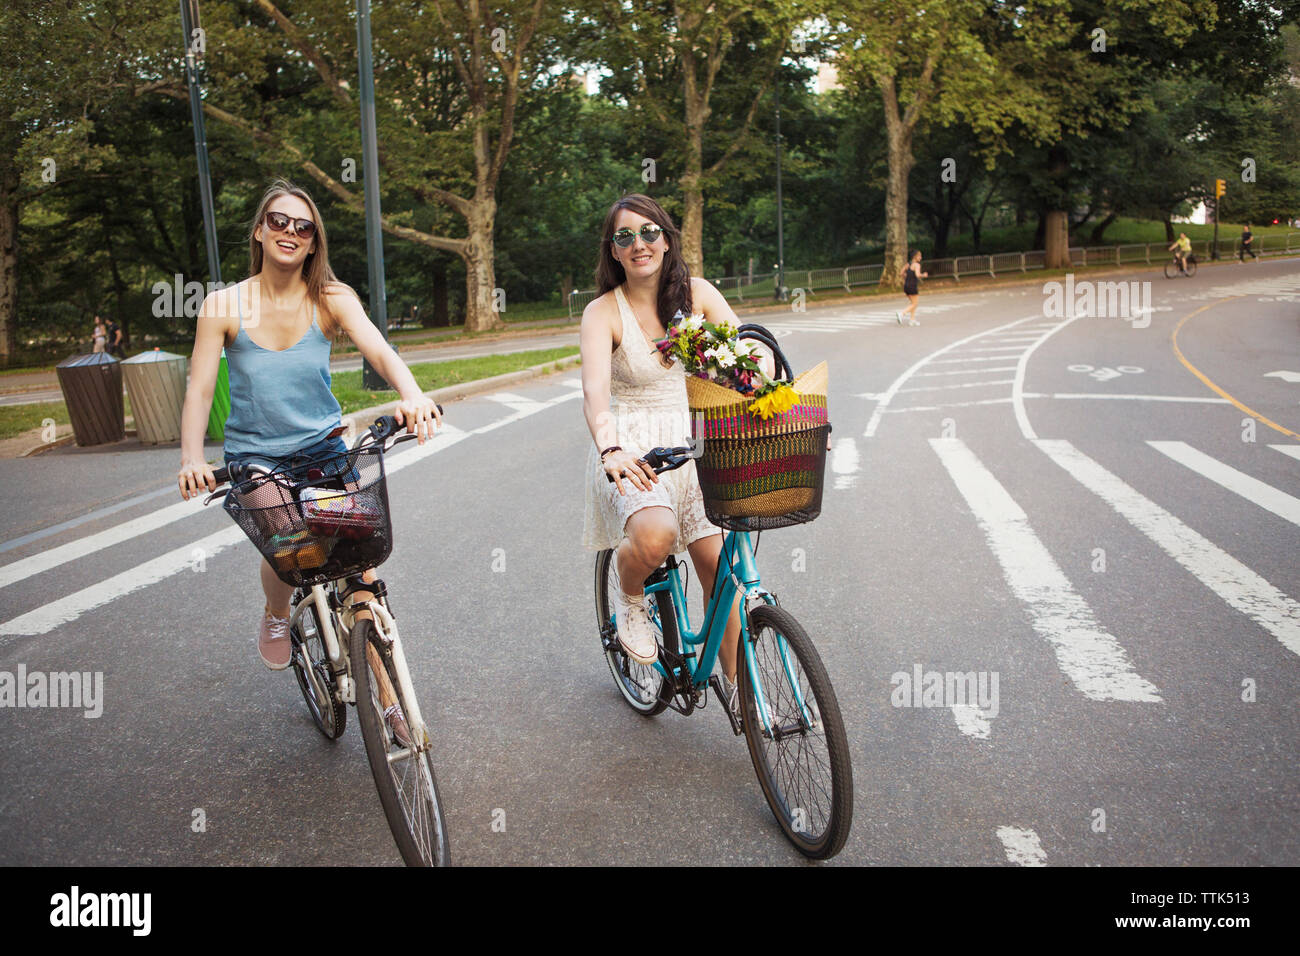 Smiling women cycling on city street contre des arbres Banque D'Images